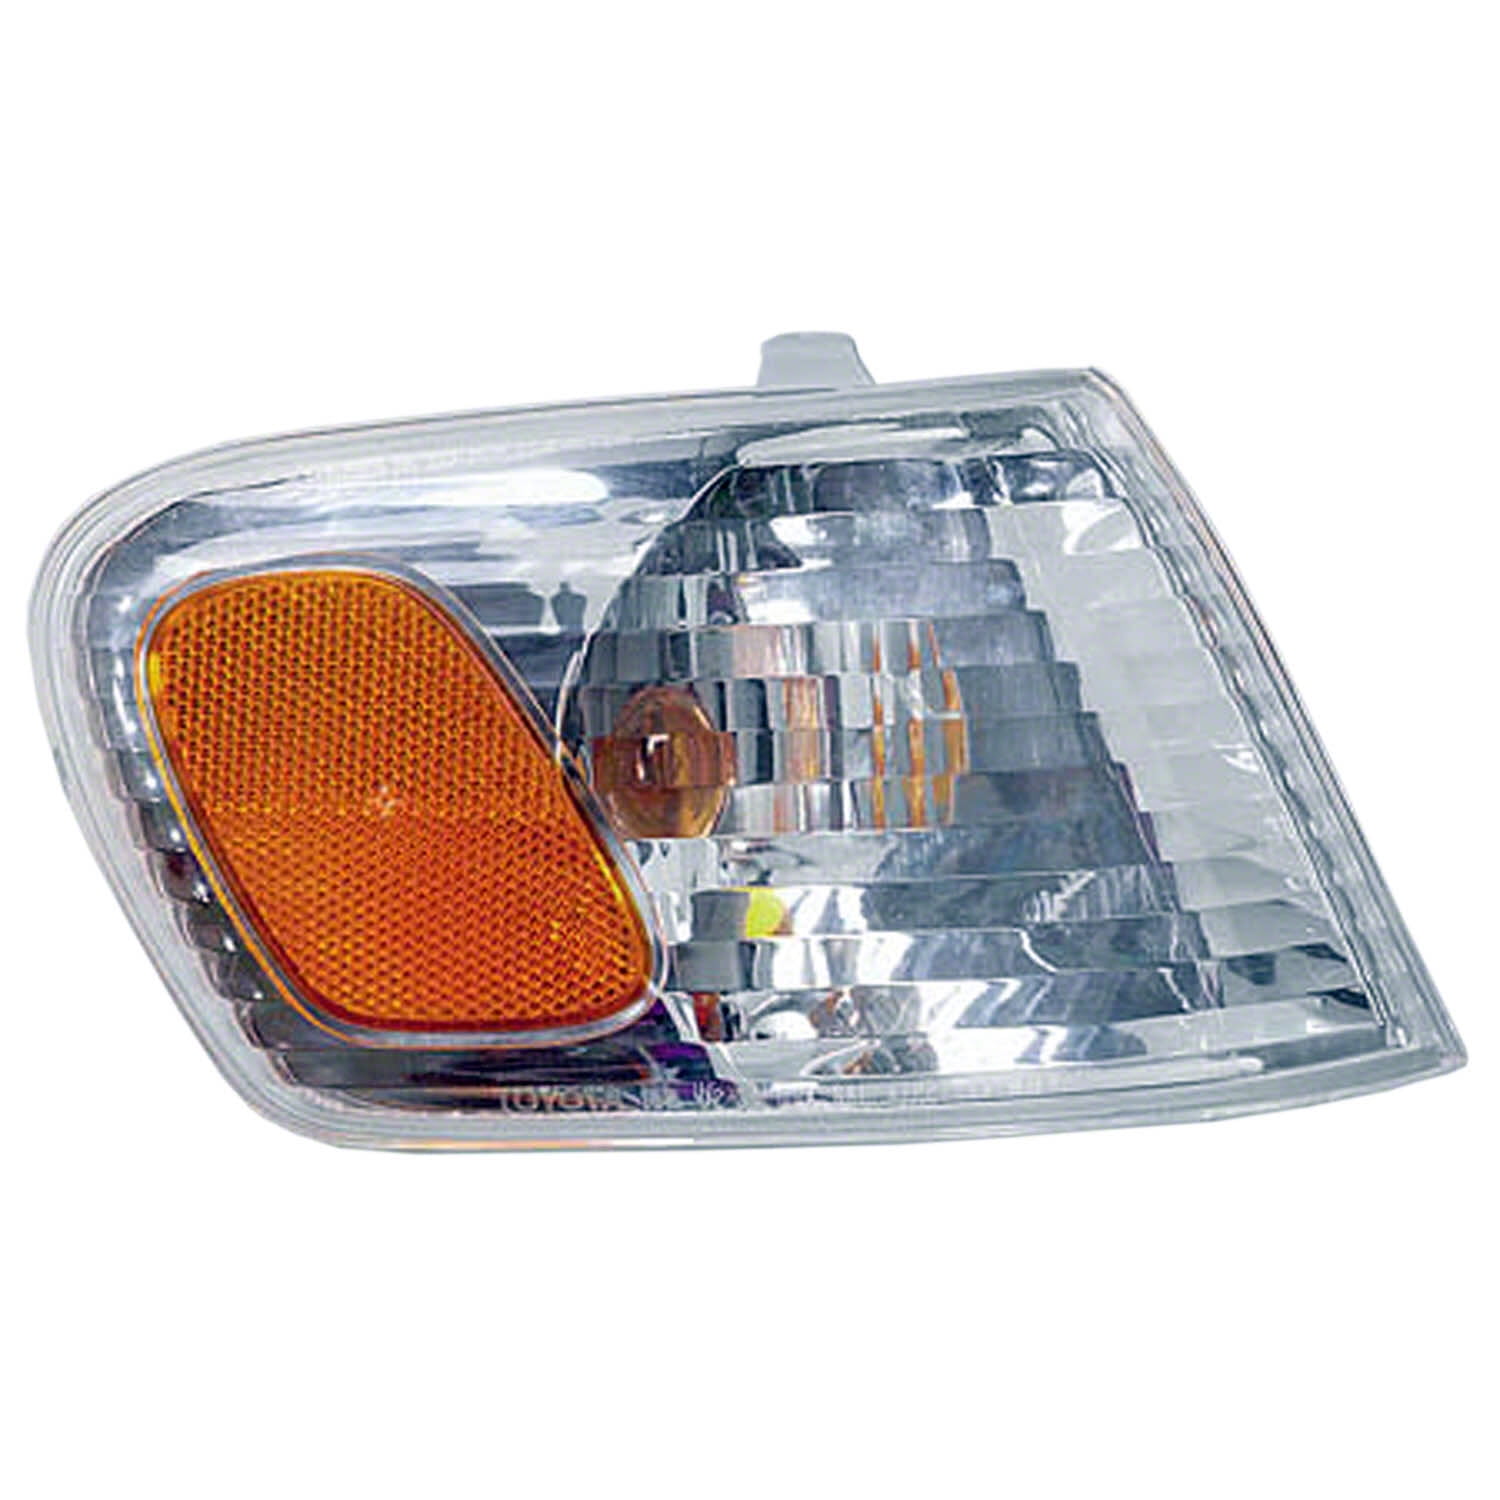 LABLT Headlights Headlamp w/Corner Signal Lamp Left+Right for 2001 2002 Toyota Corolla 